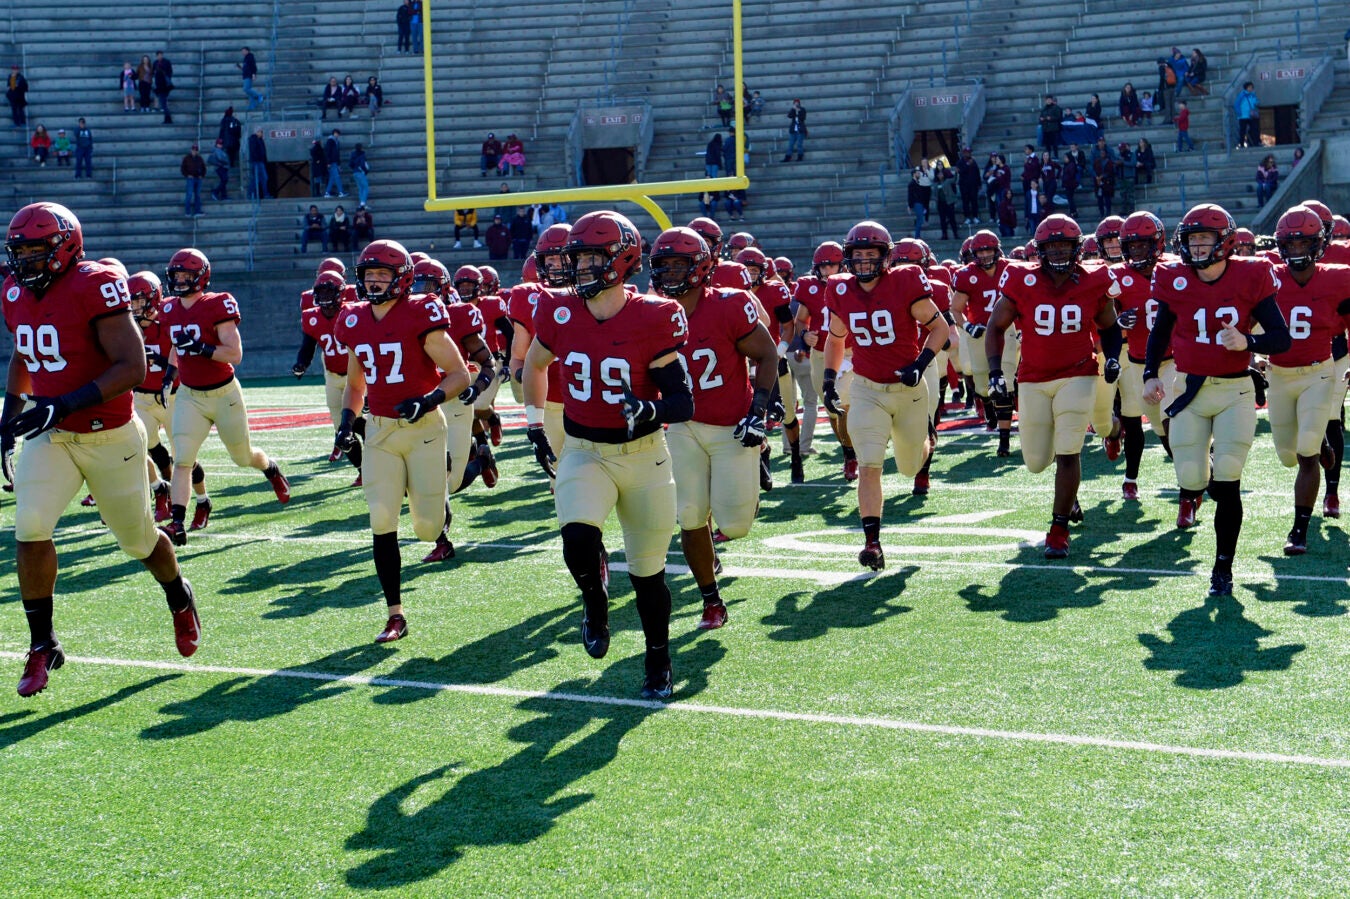 The Harvard football team takes the field against Dartmouth.